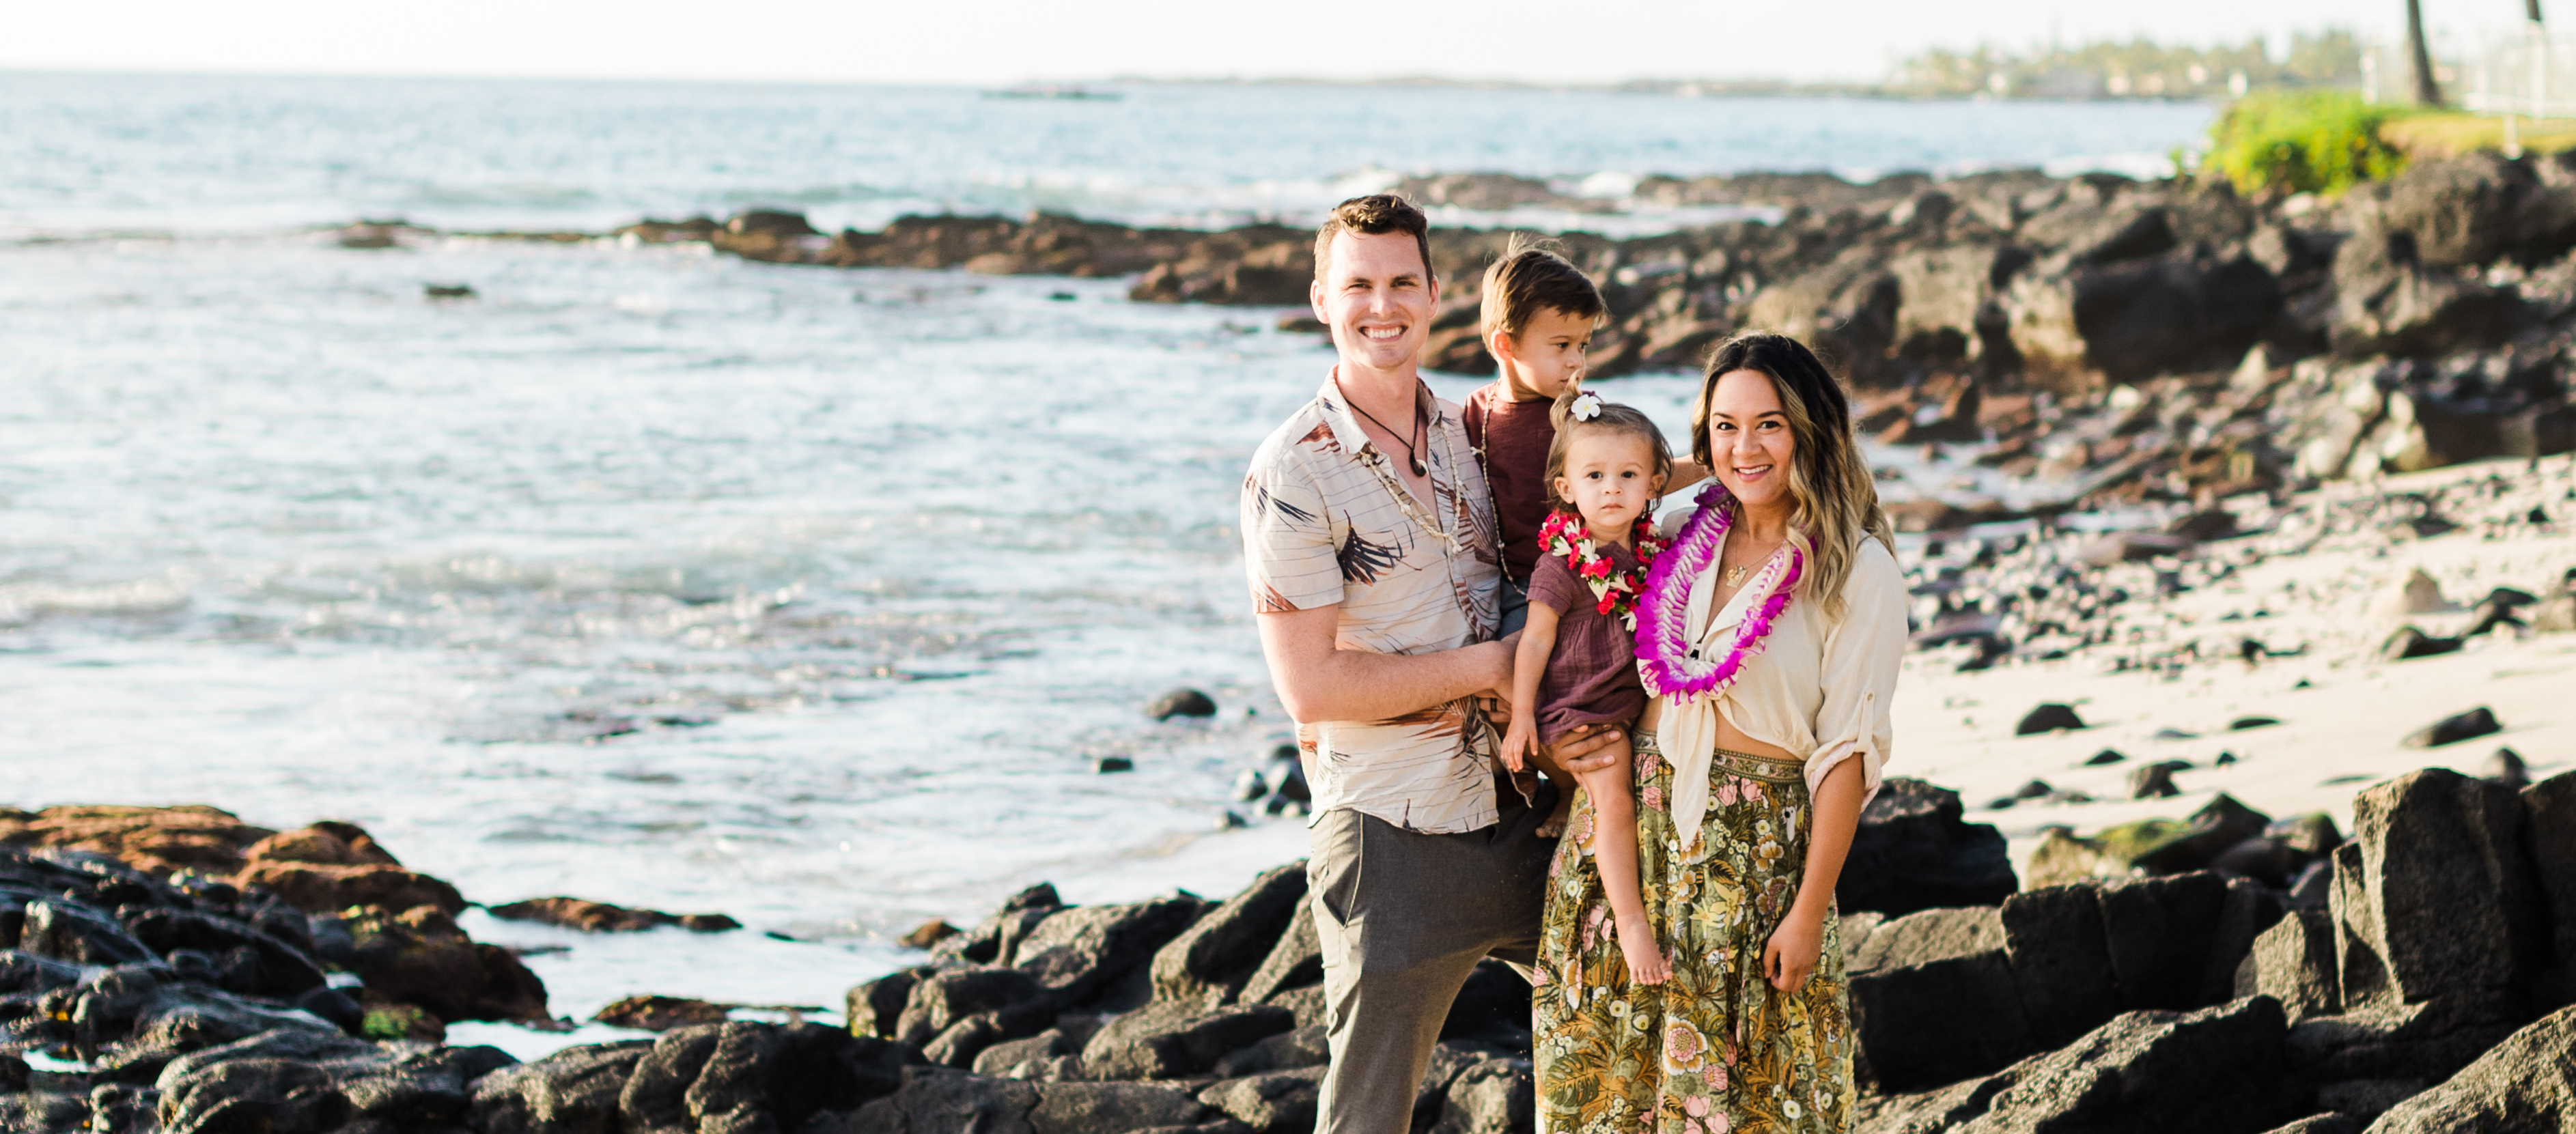 Family vacation photosession on Hawaii